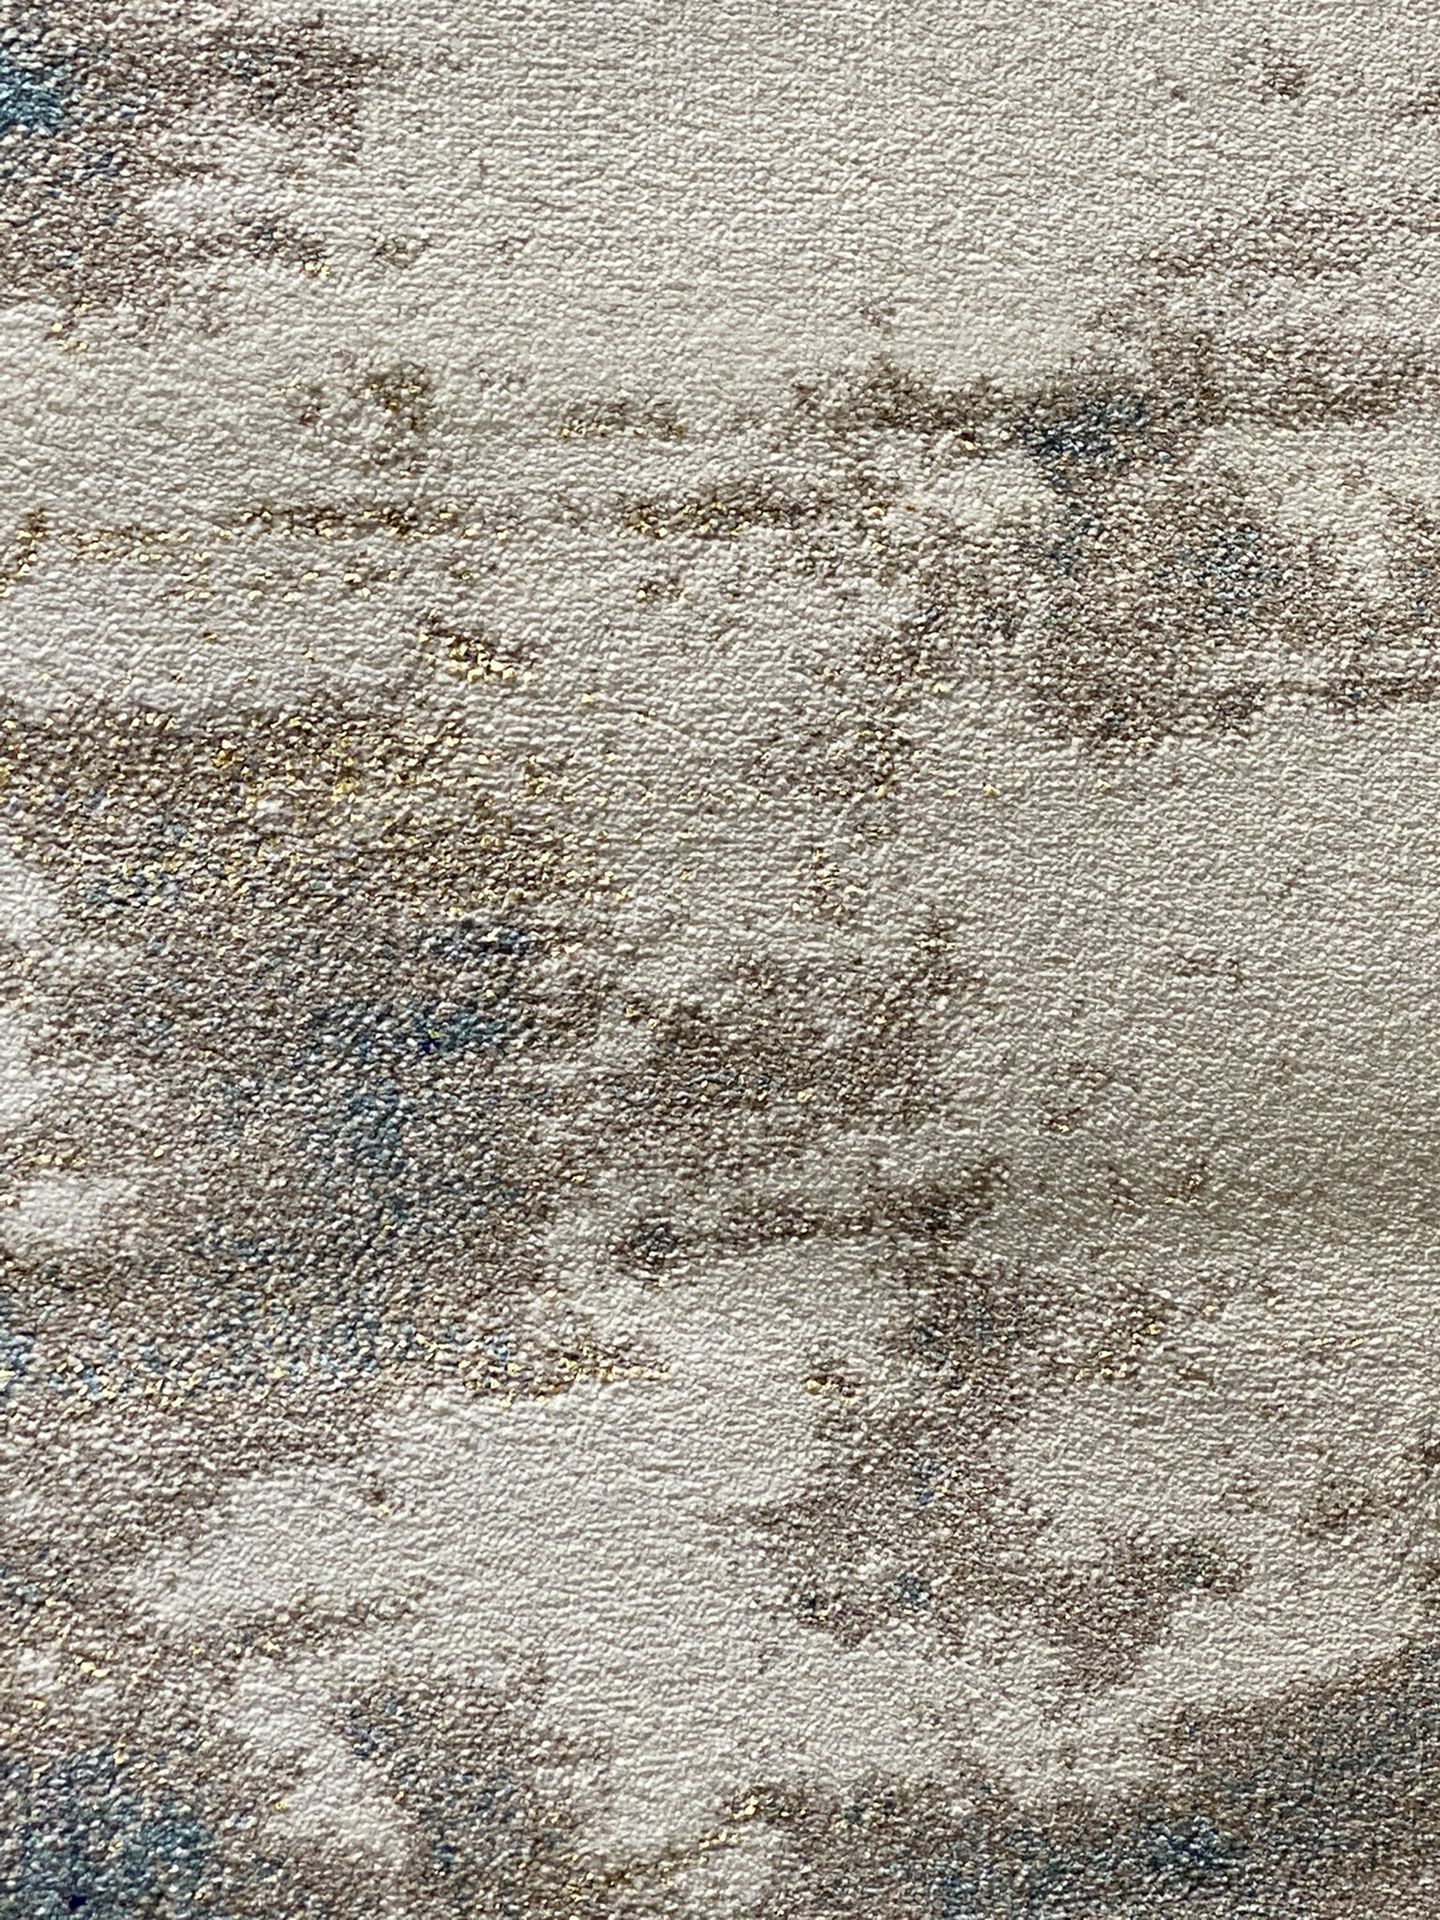 8x10 Area Rugs Carpet Rugs Modern Desgin Super Thick Pile Colors Blue Navy Beige Gold 